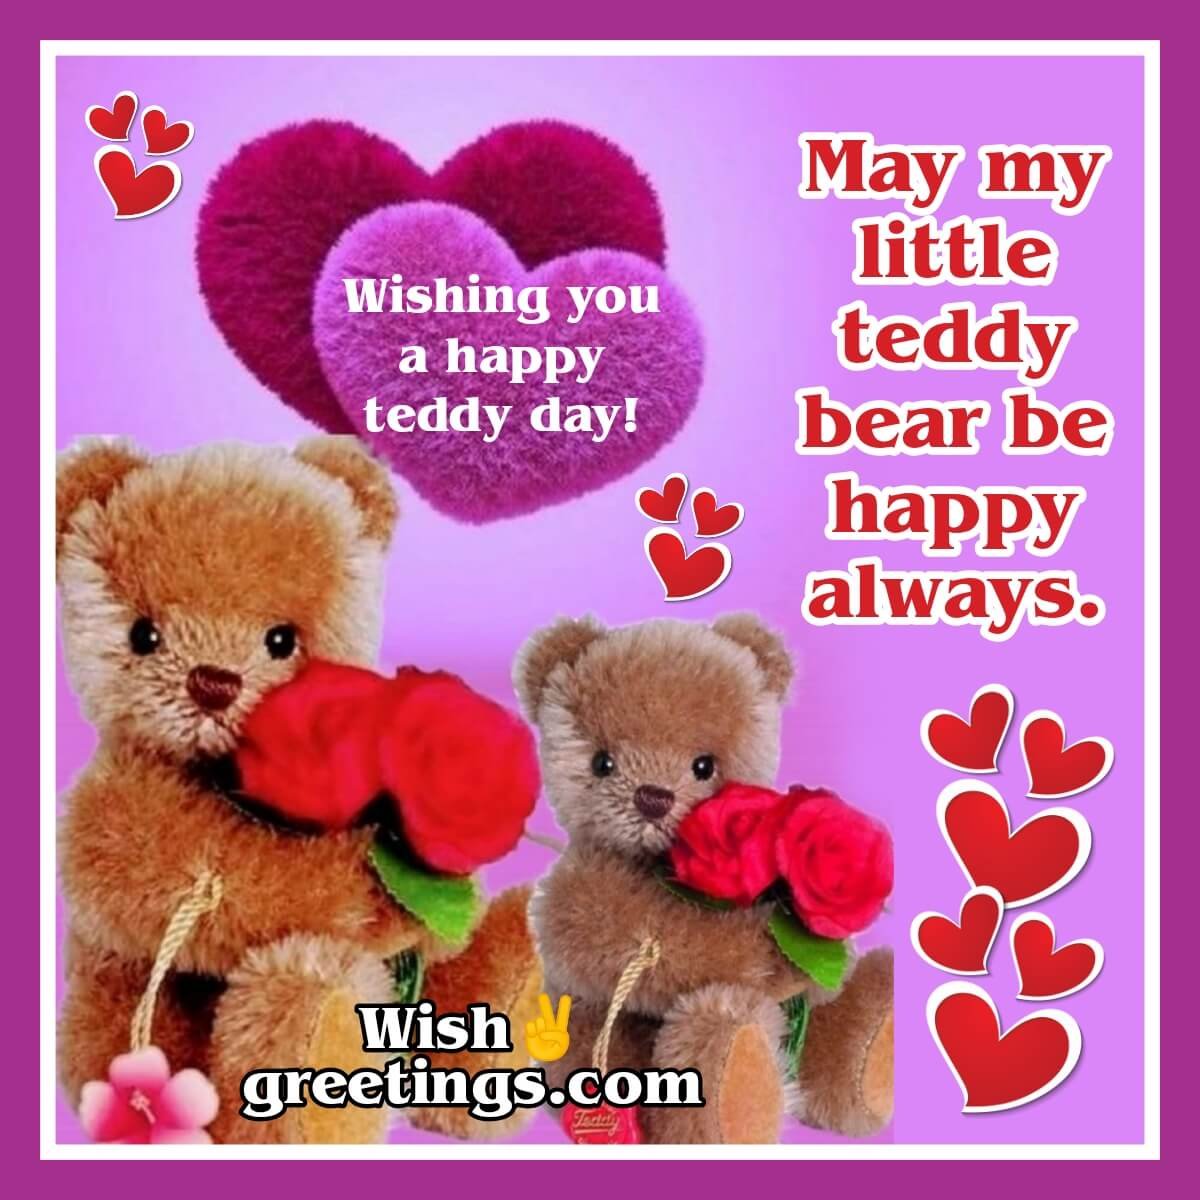 Wishing You A Happy Teddy Day!